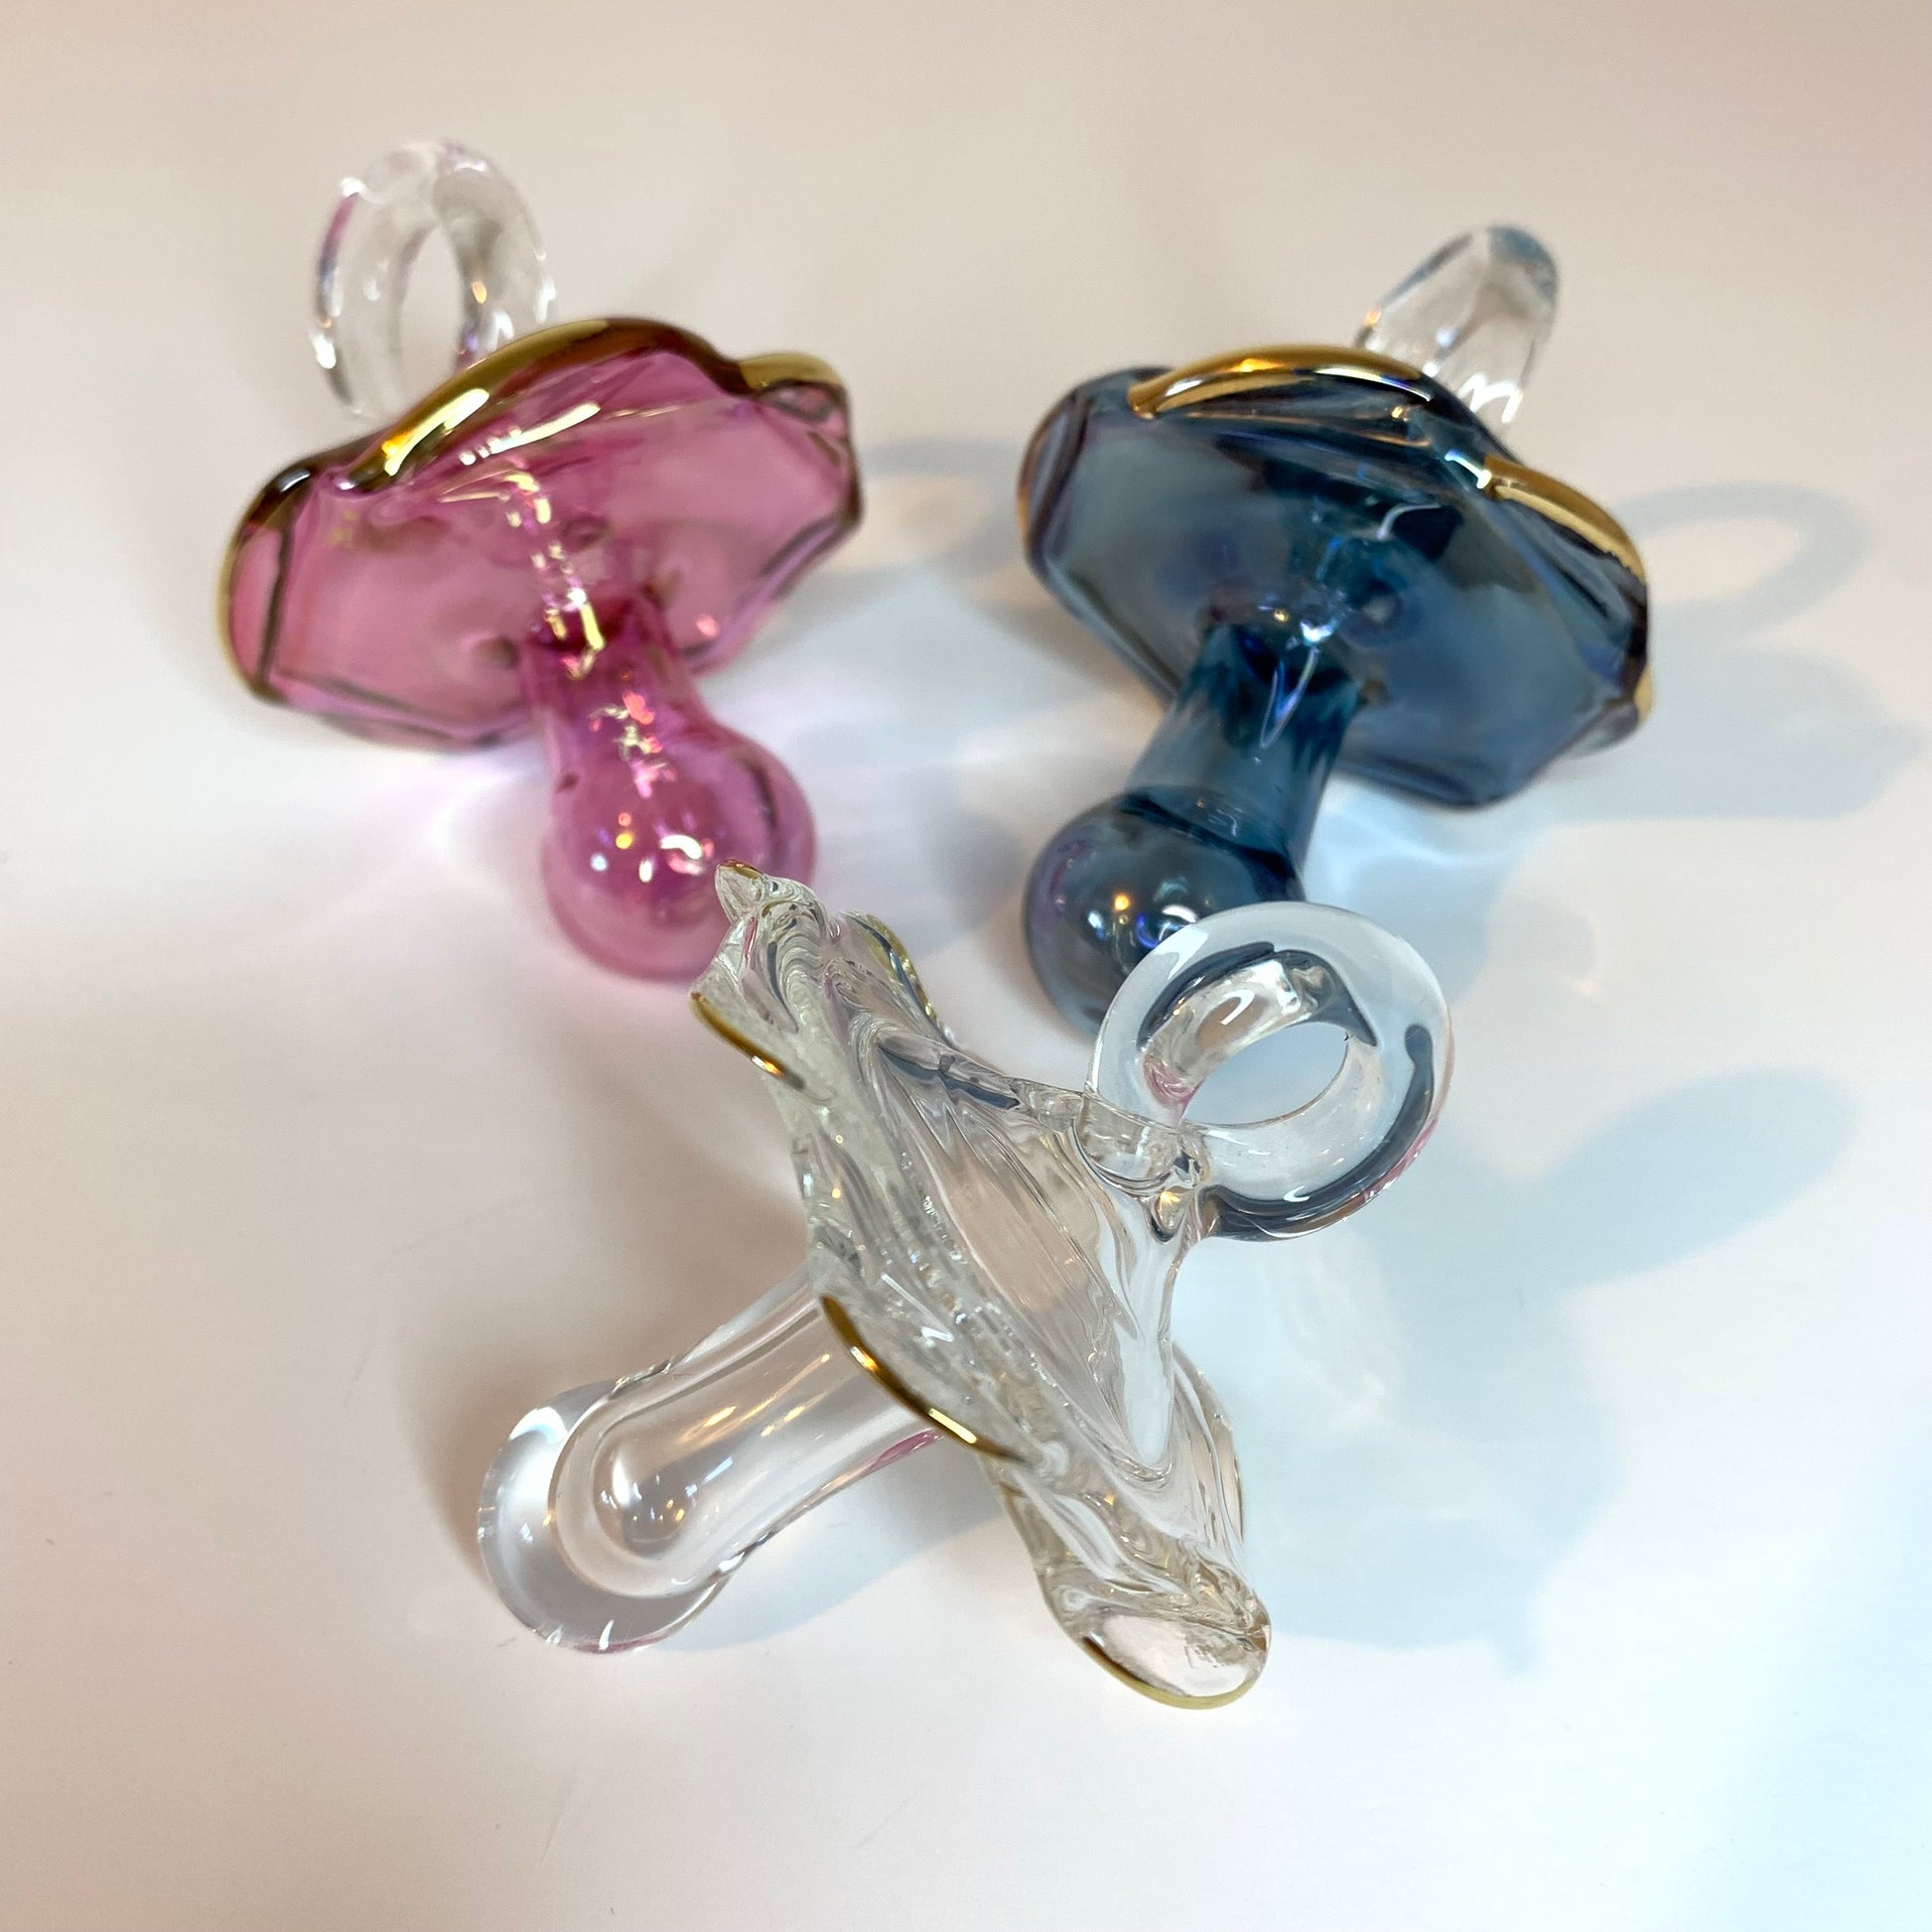 Blown Glass Ornament - Pacifier: Clear